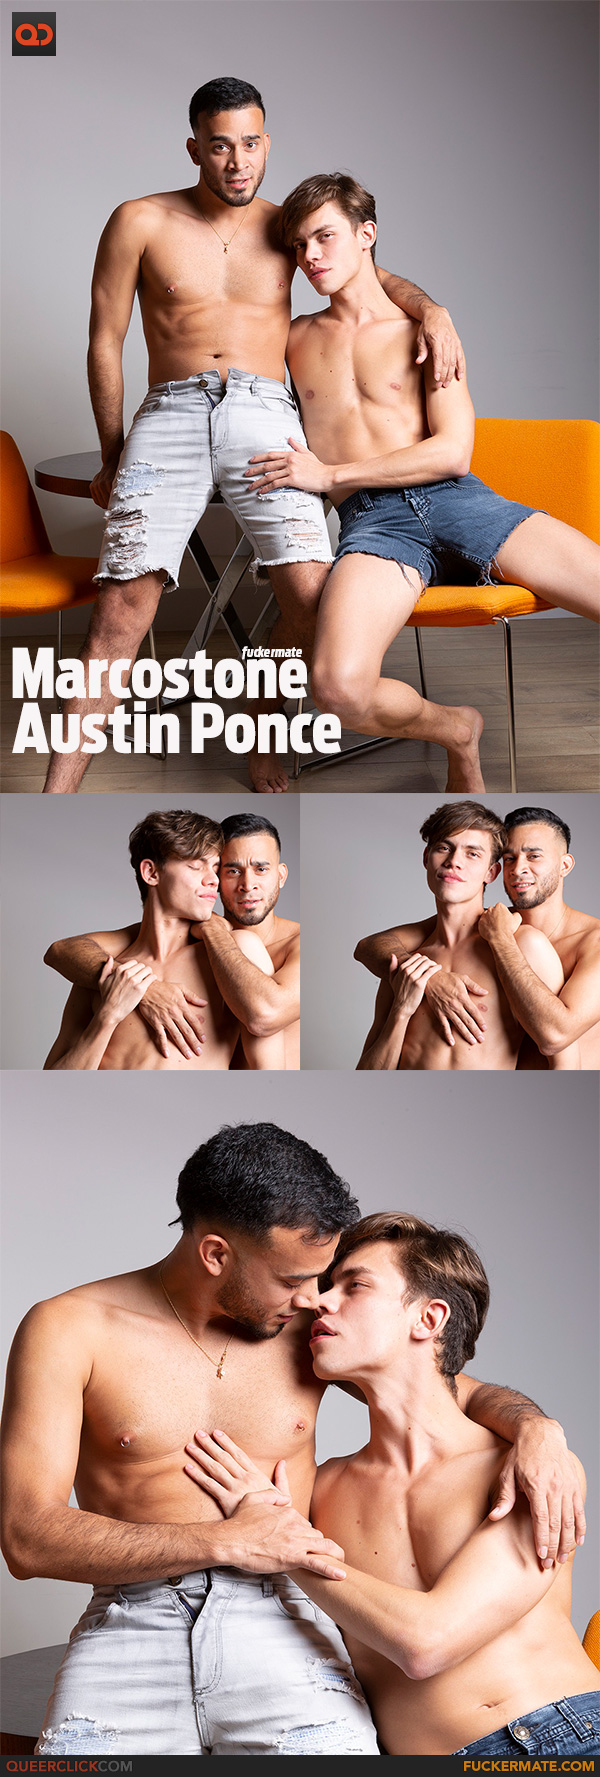 FuckerMate: Austin Ponce and Marcostone